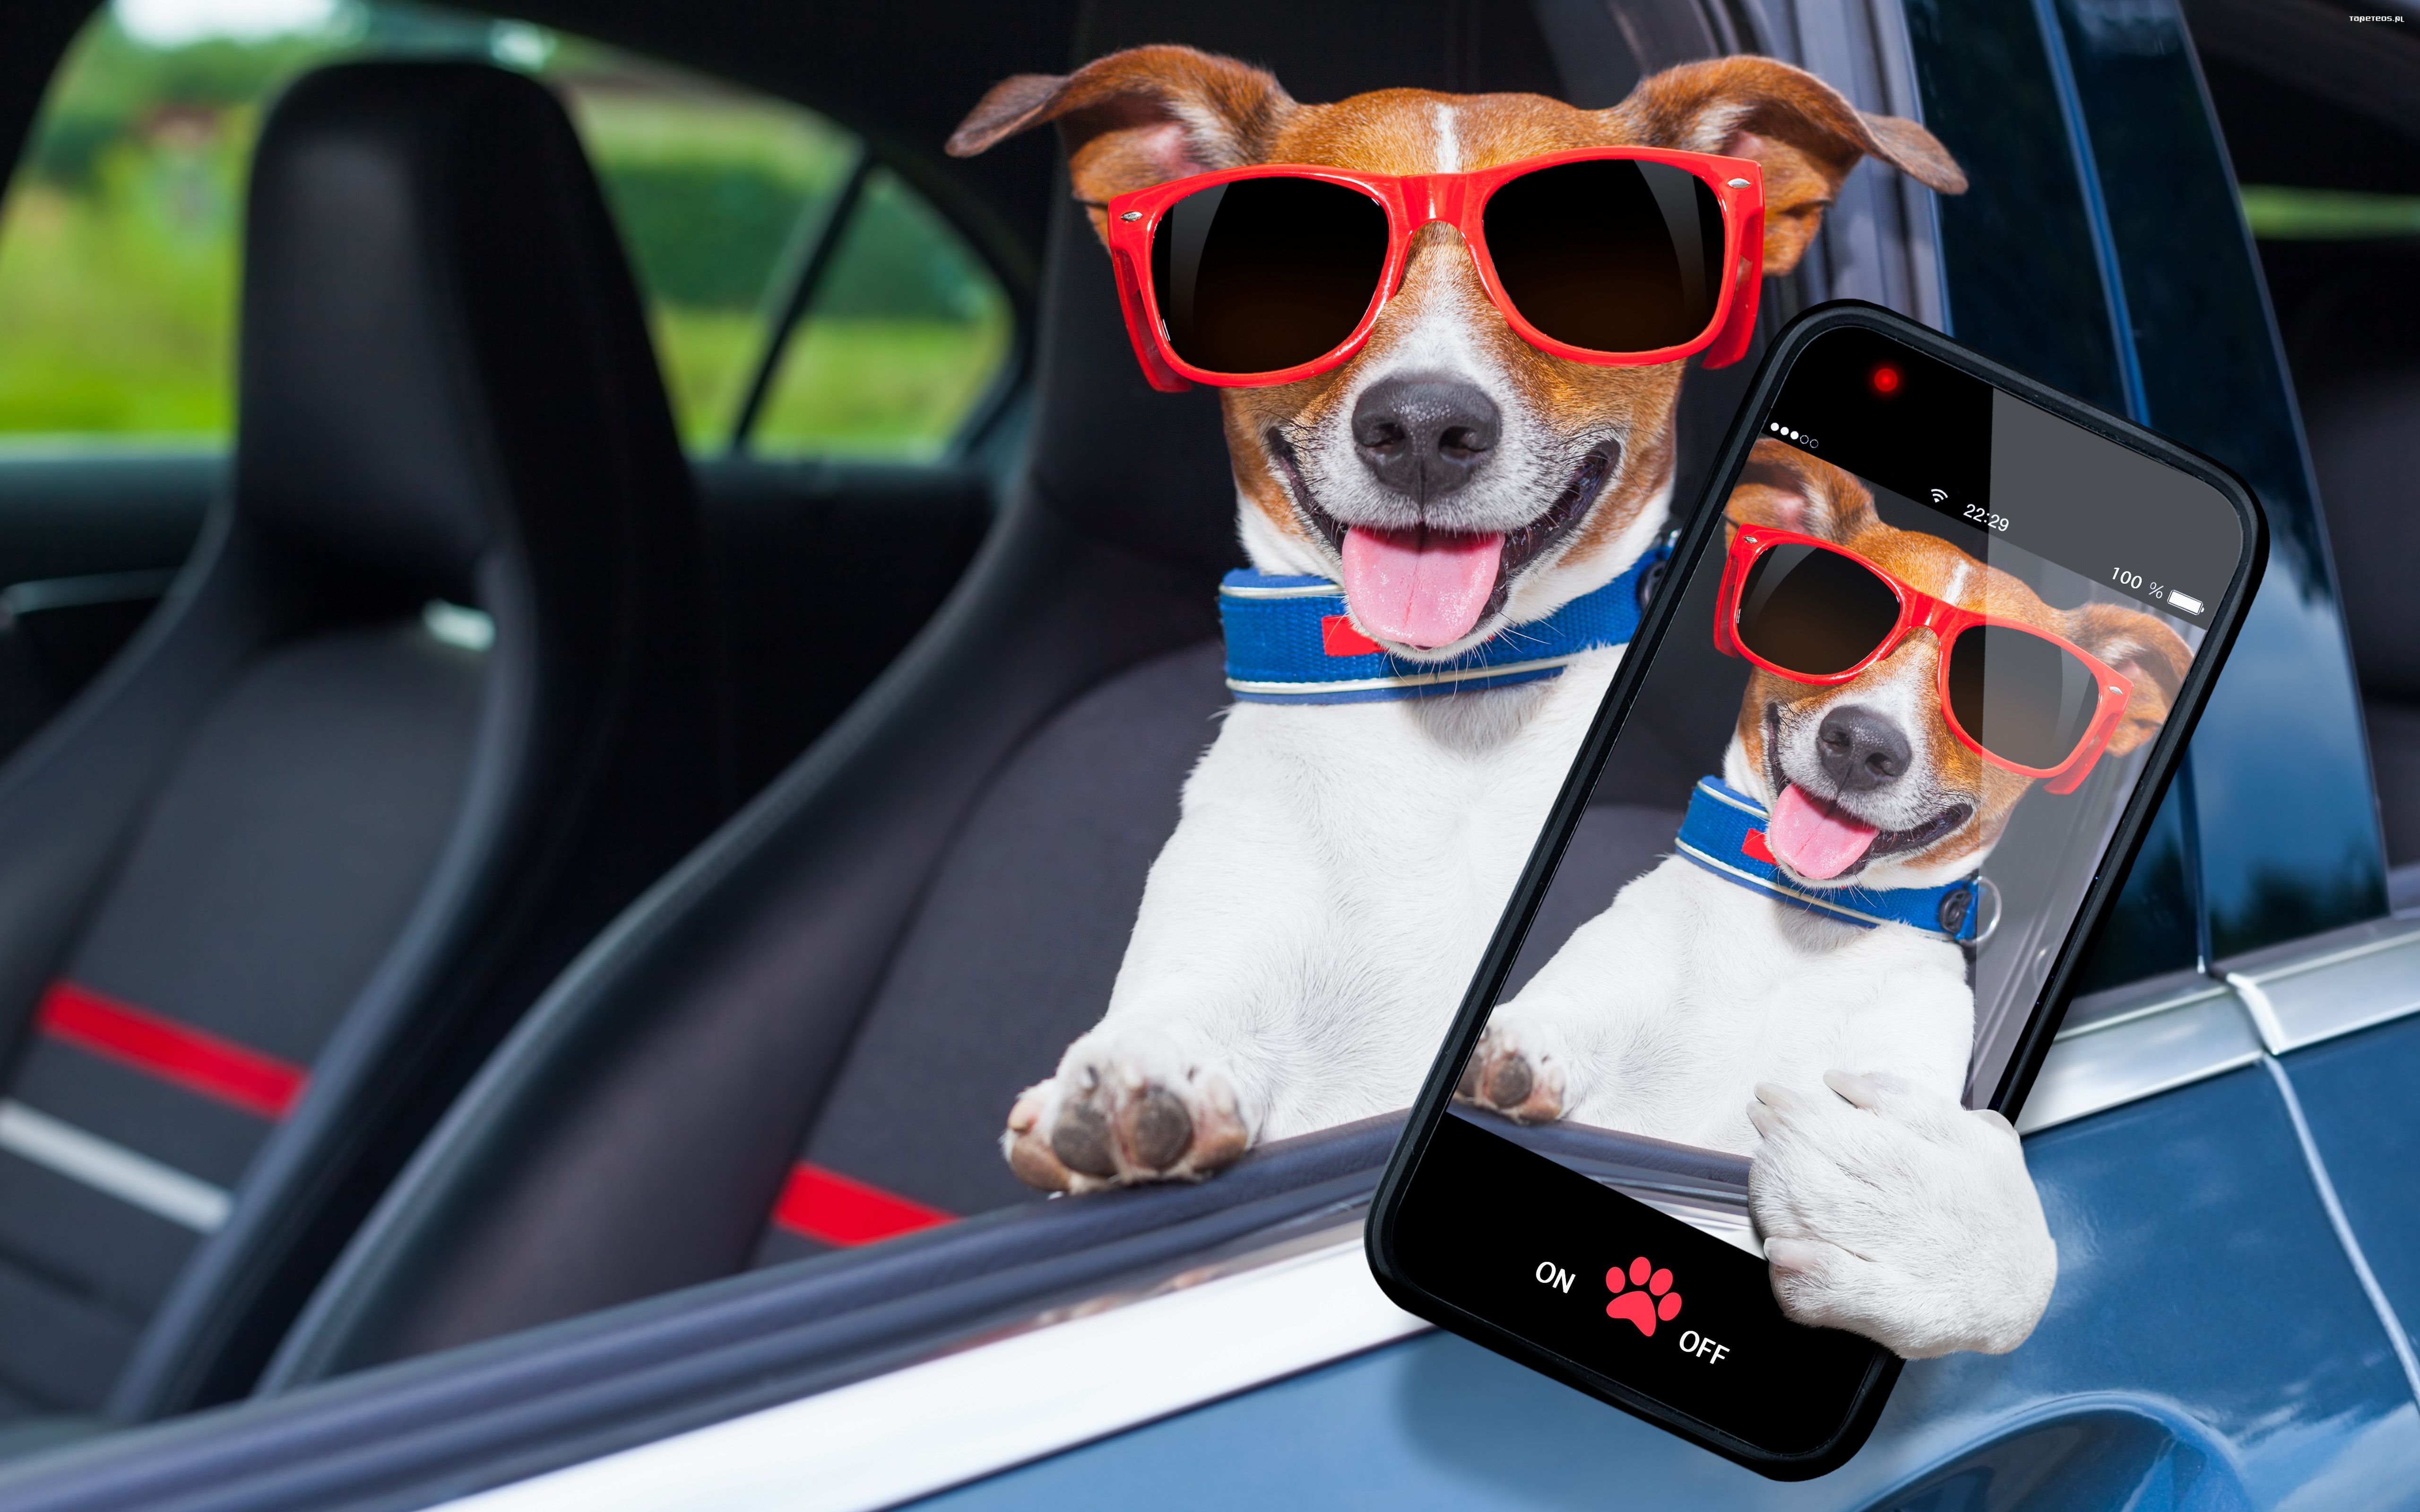 Jack Russell Terrier 112 Psy, Zwierzeta, Humor, Samochod, Okulary, Telefon, Smartfon